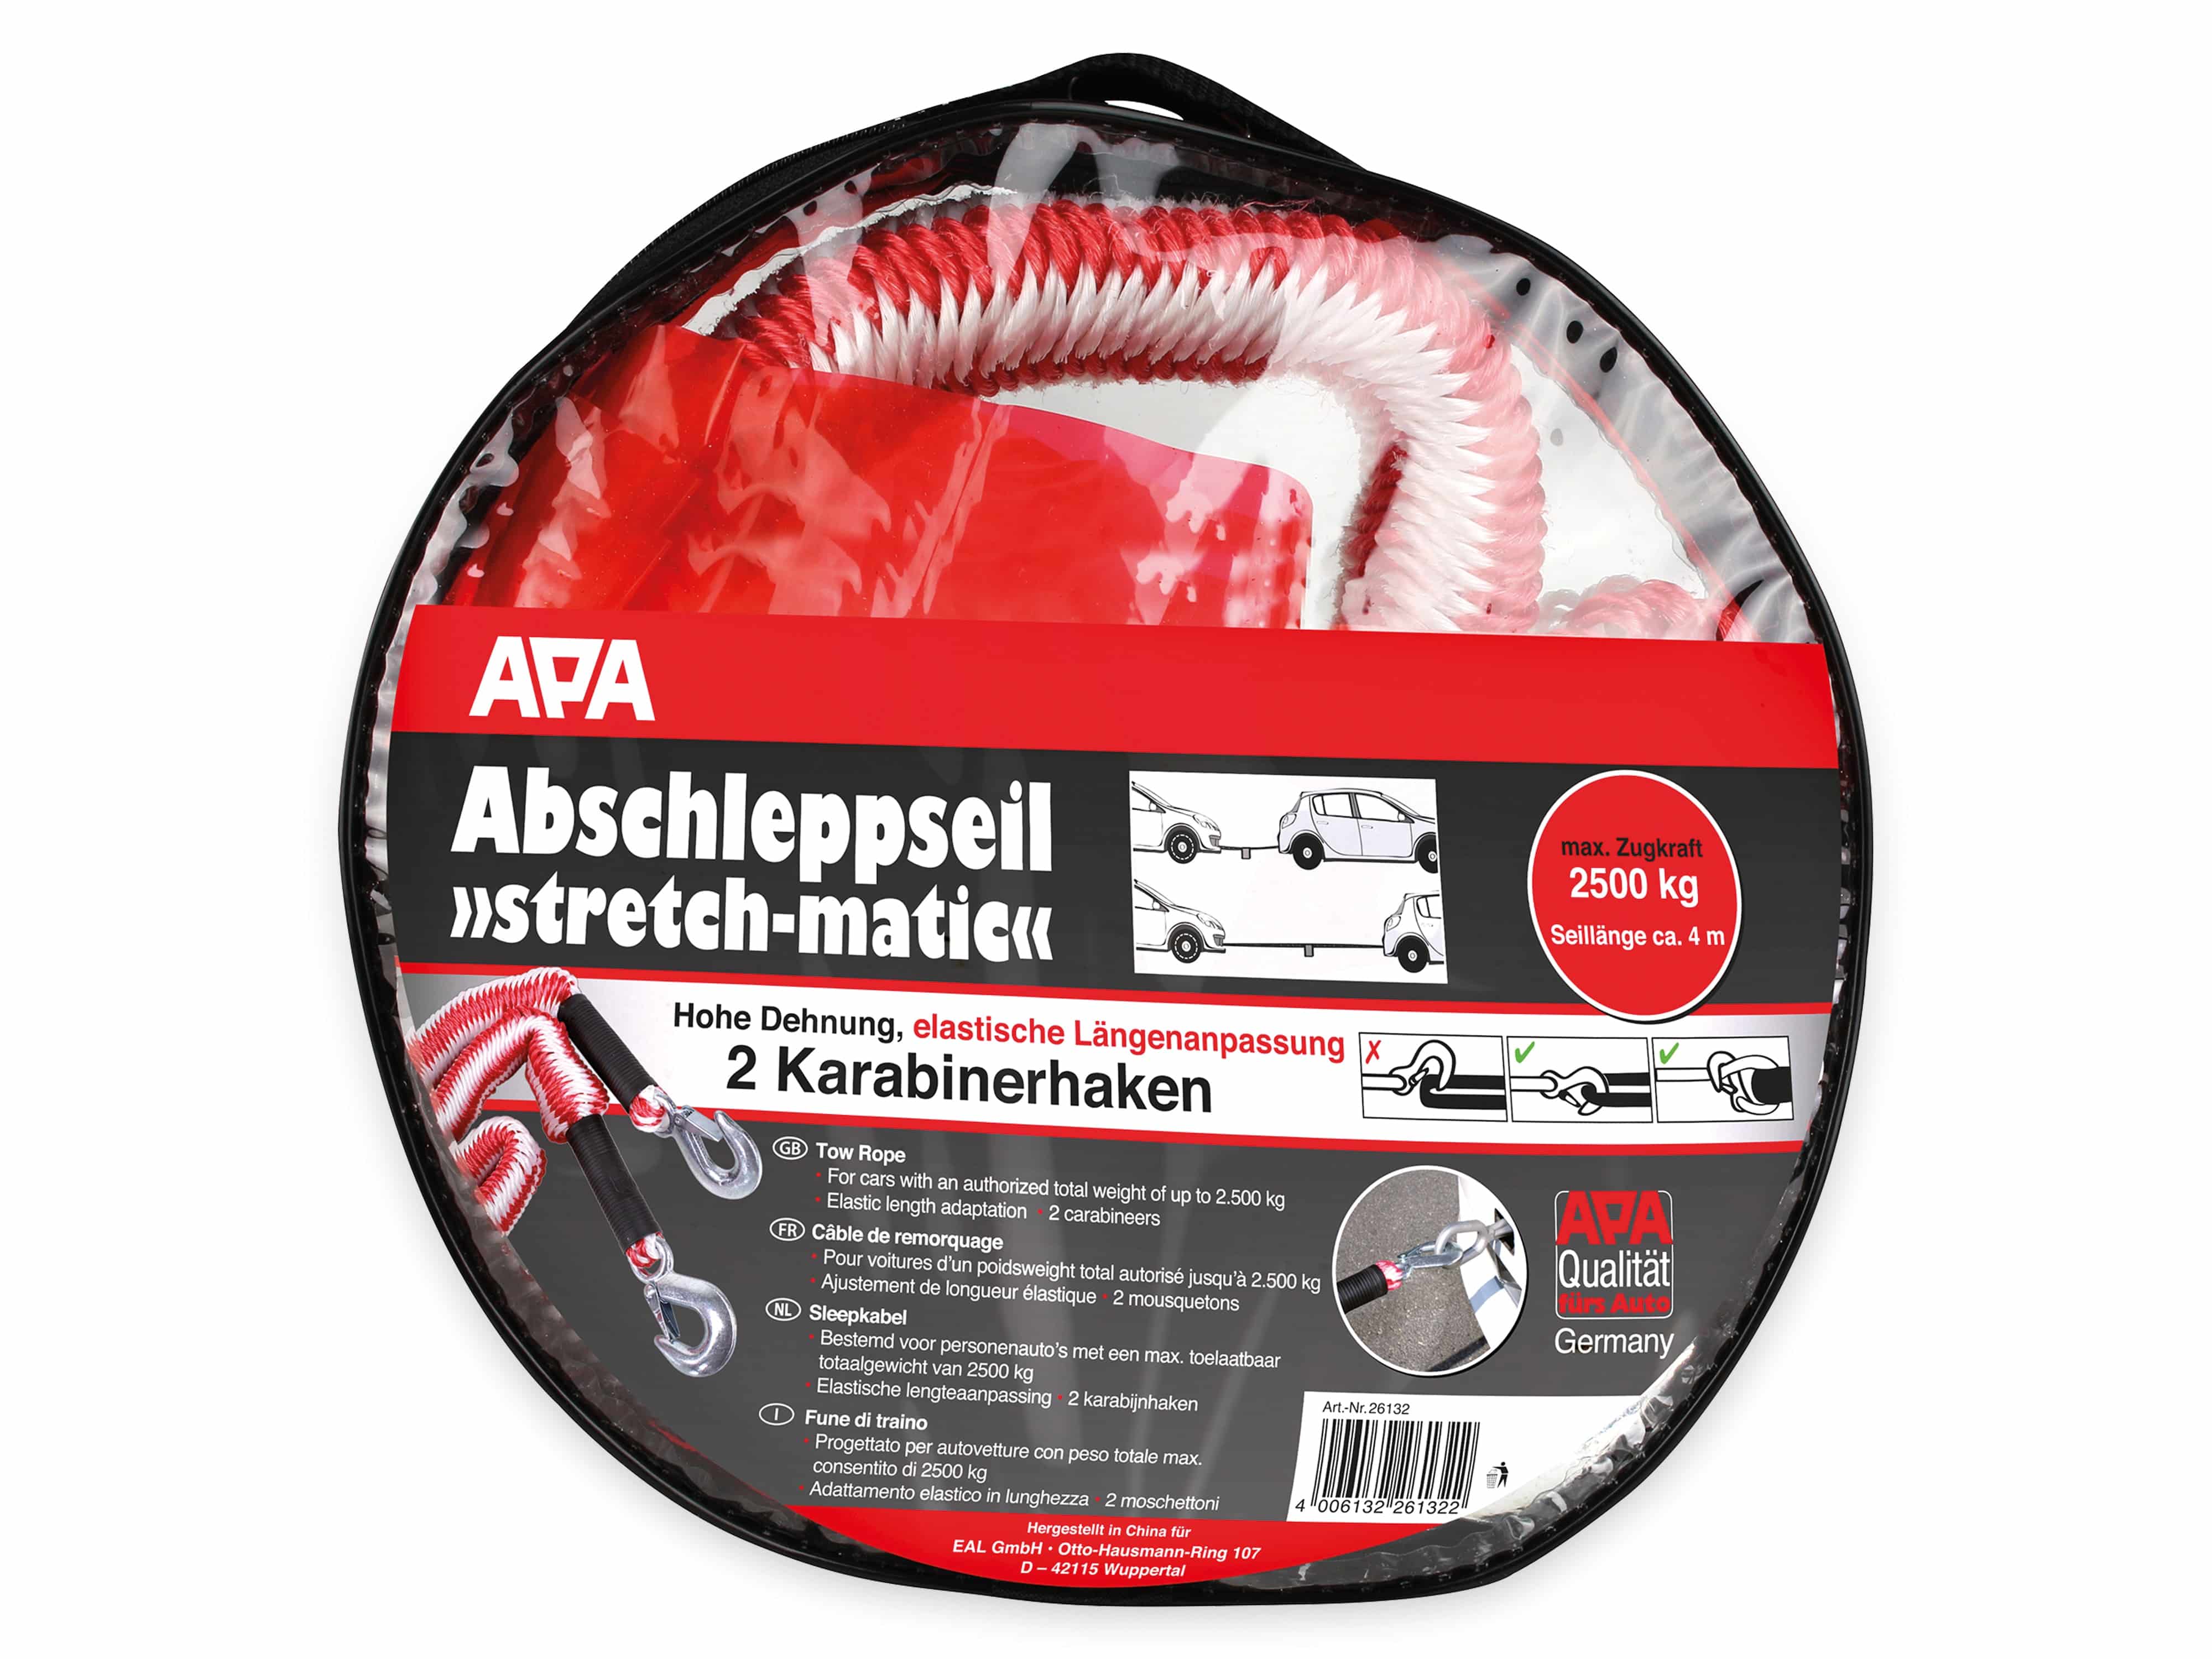 APA Abschleppseil 26132, Stretch-matic, max. 2500 kg, 4 m